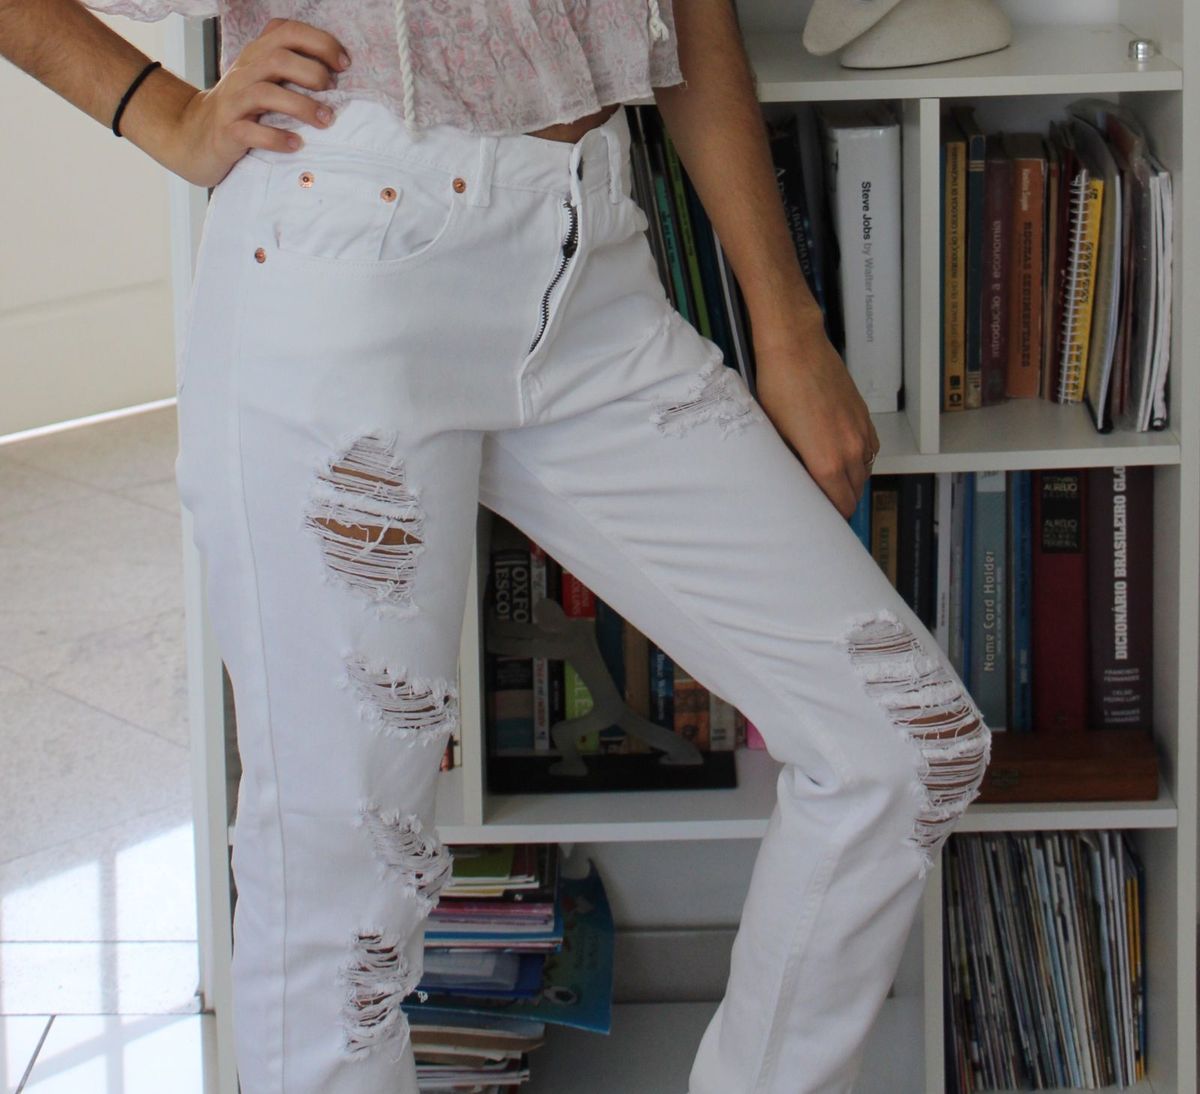 calça jeans branca rasgadinha feminina